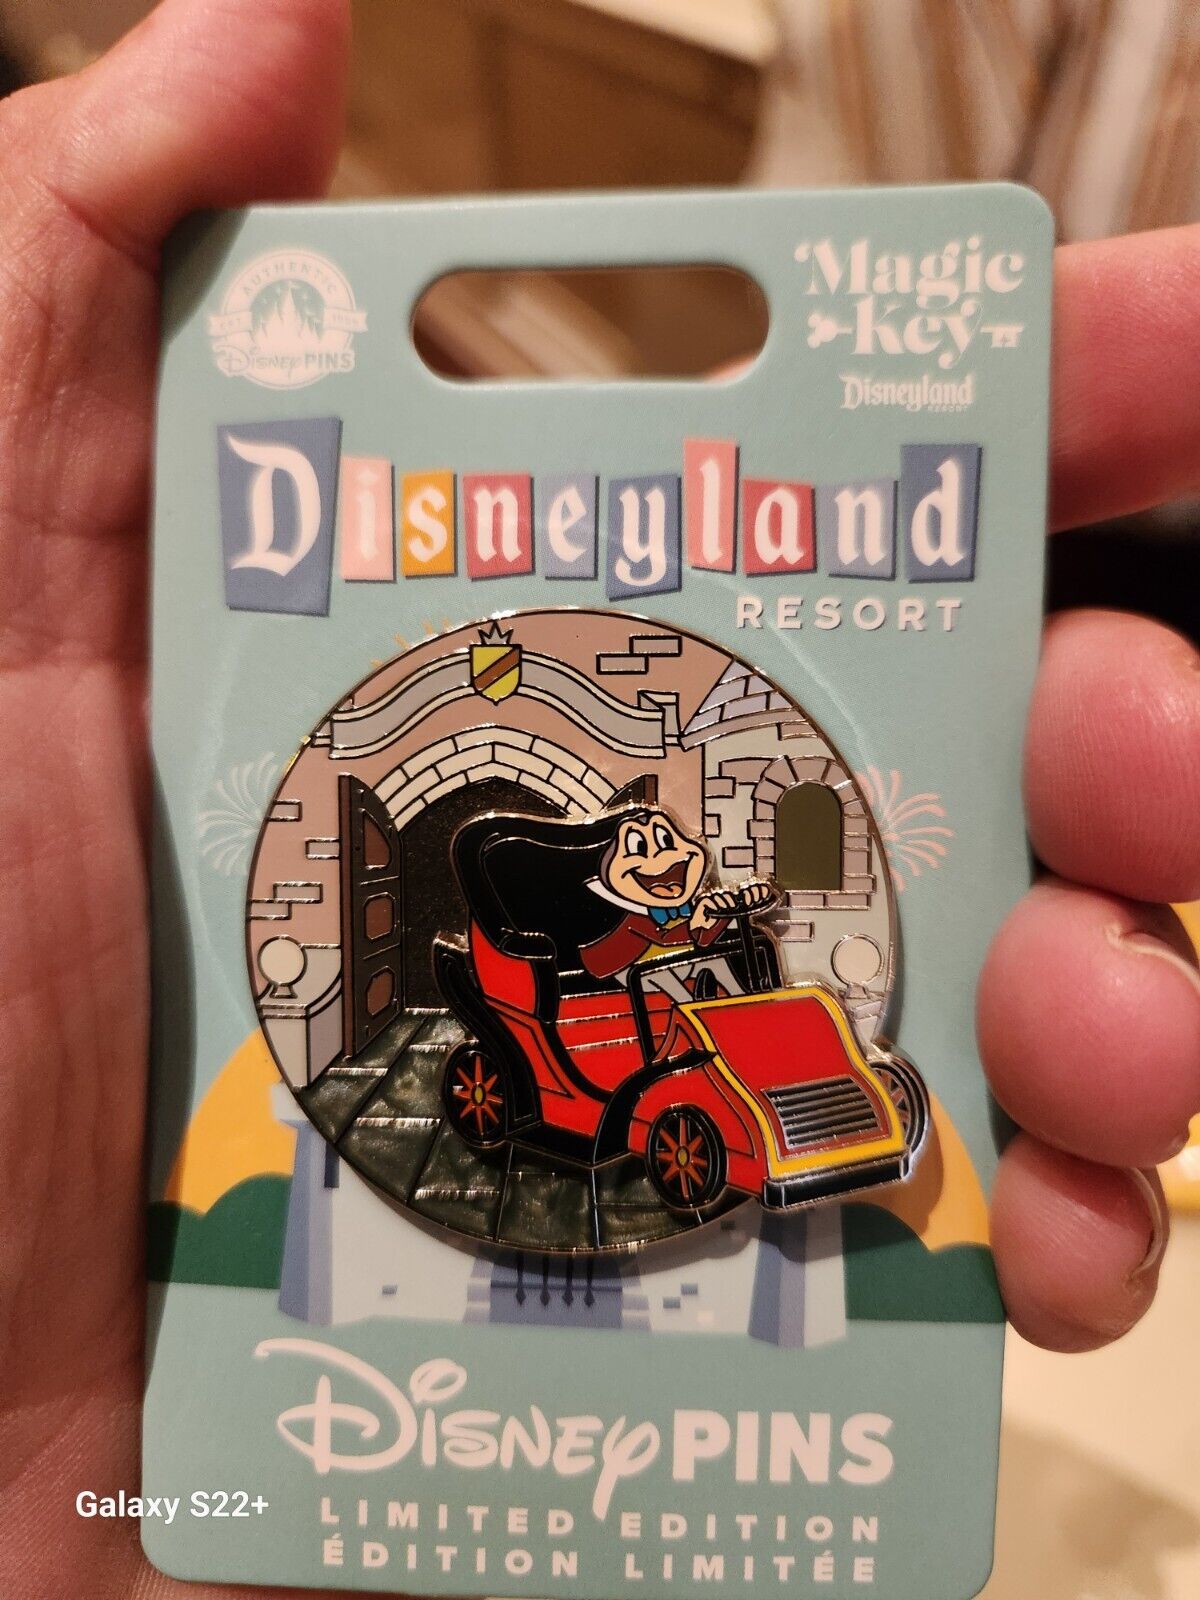 Disneyland quarterly magic Key exclusive mr. toad pin 